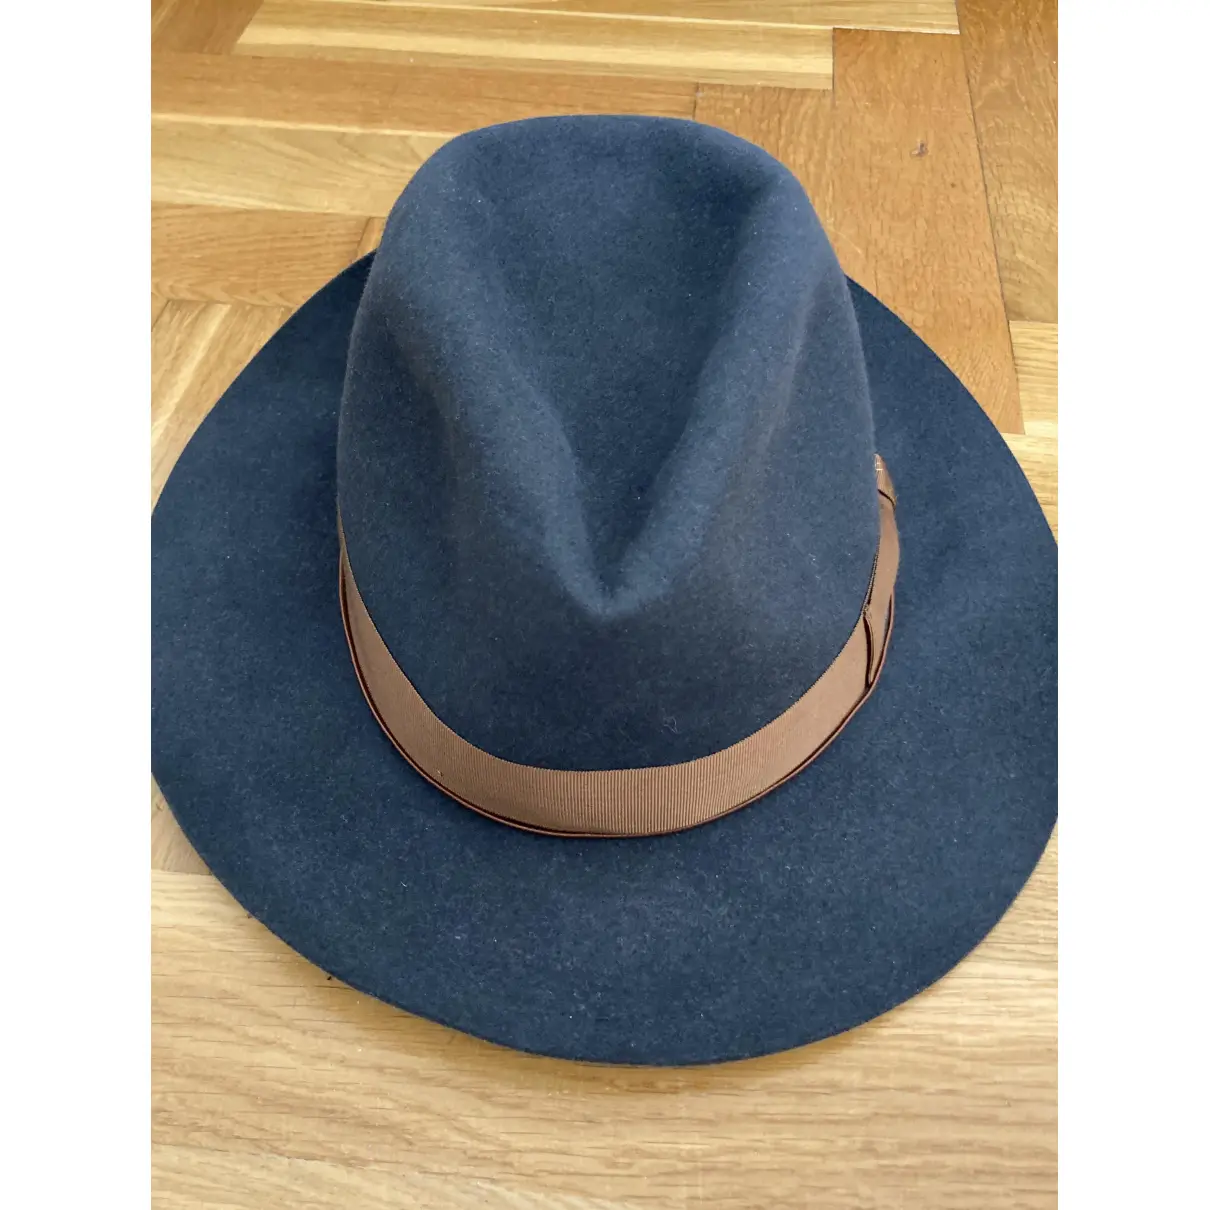 Buy Borsalino Rabbit hat online